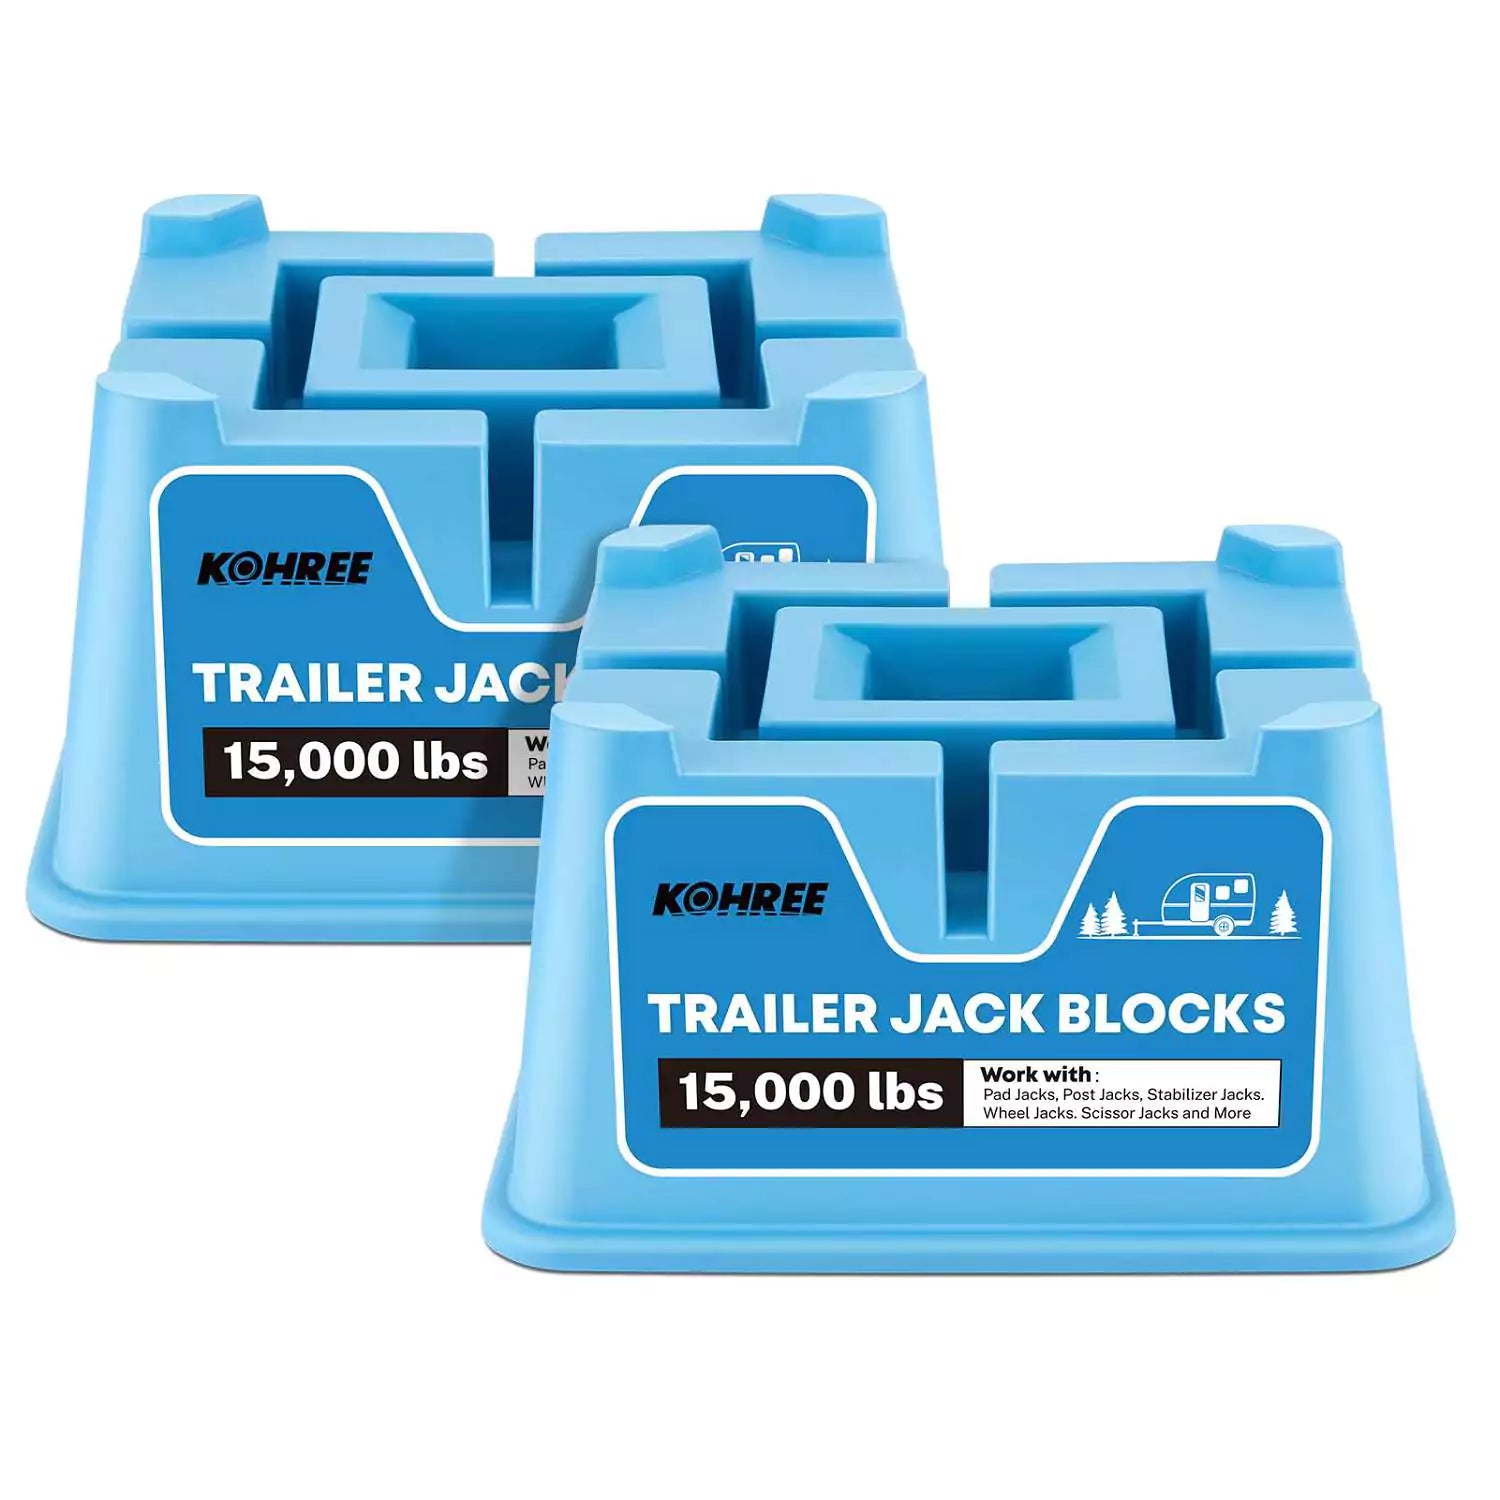 Kohree trailer jack block 2 pack